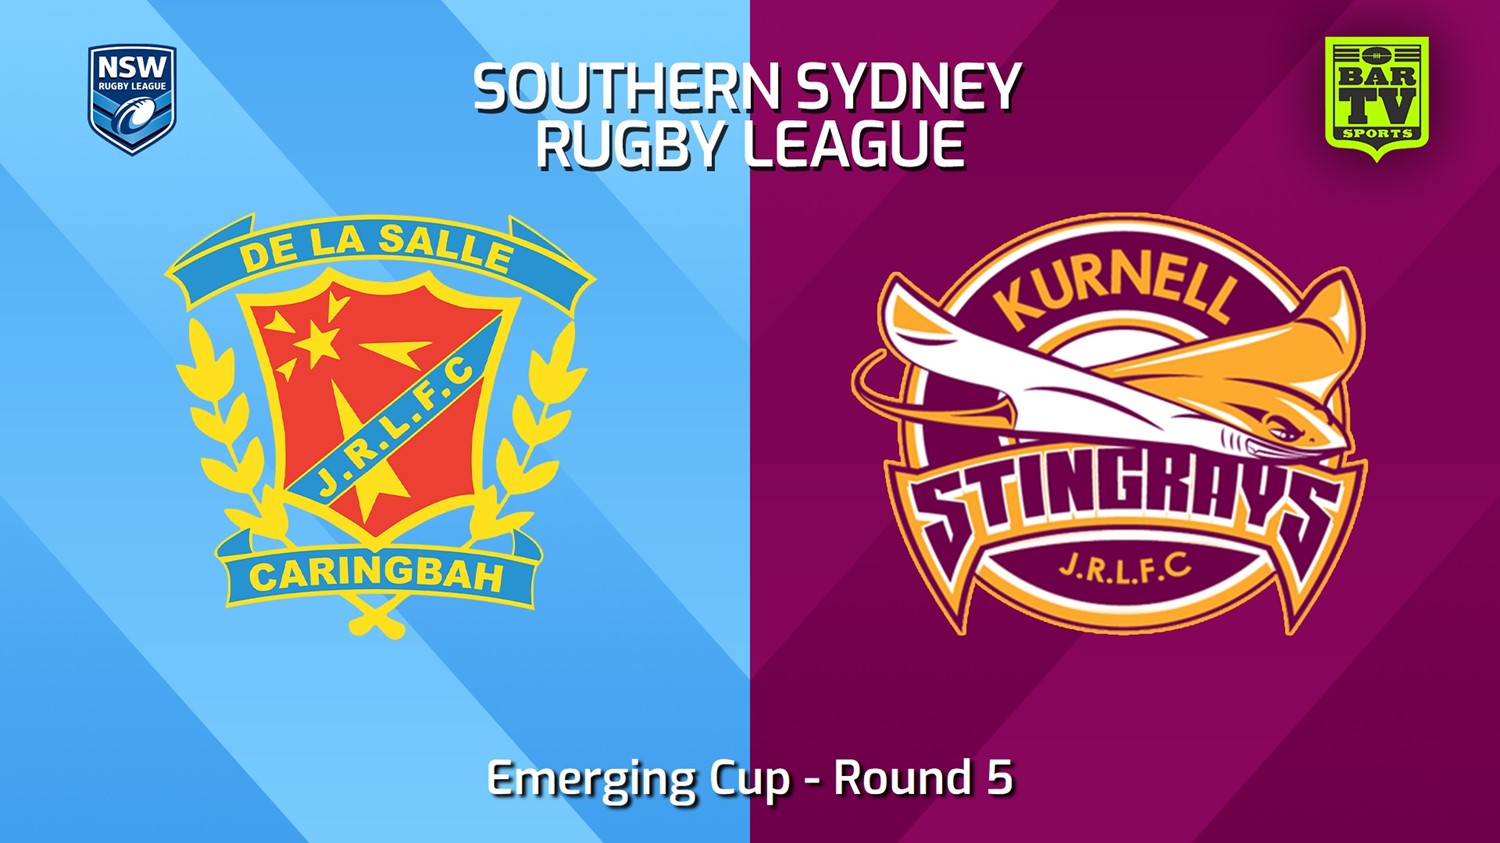 240518-video-S. Sydney Open Round 5 - Emerging Cup - De La Salle v Kurnell Stingrays Slate Image